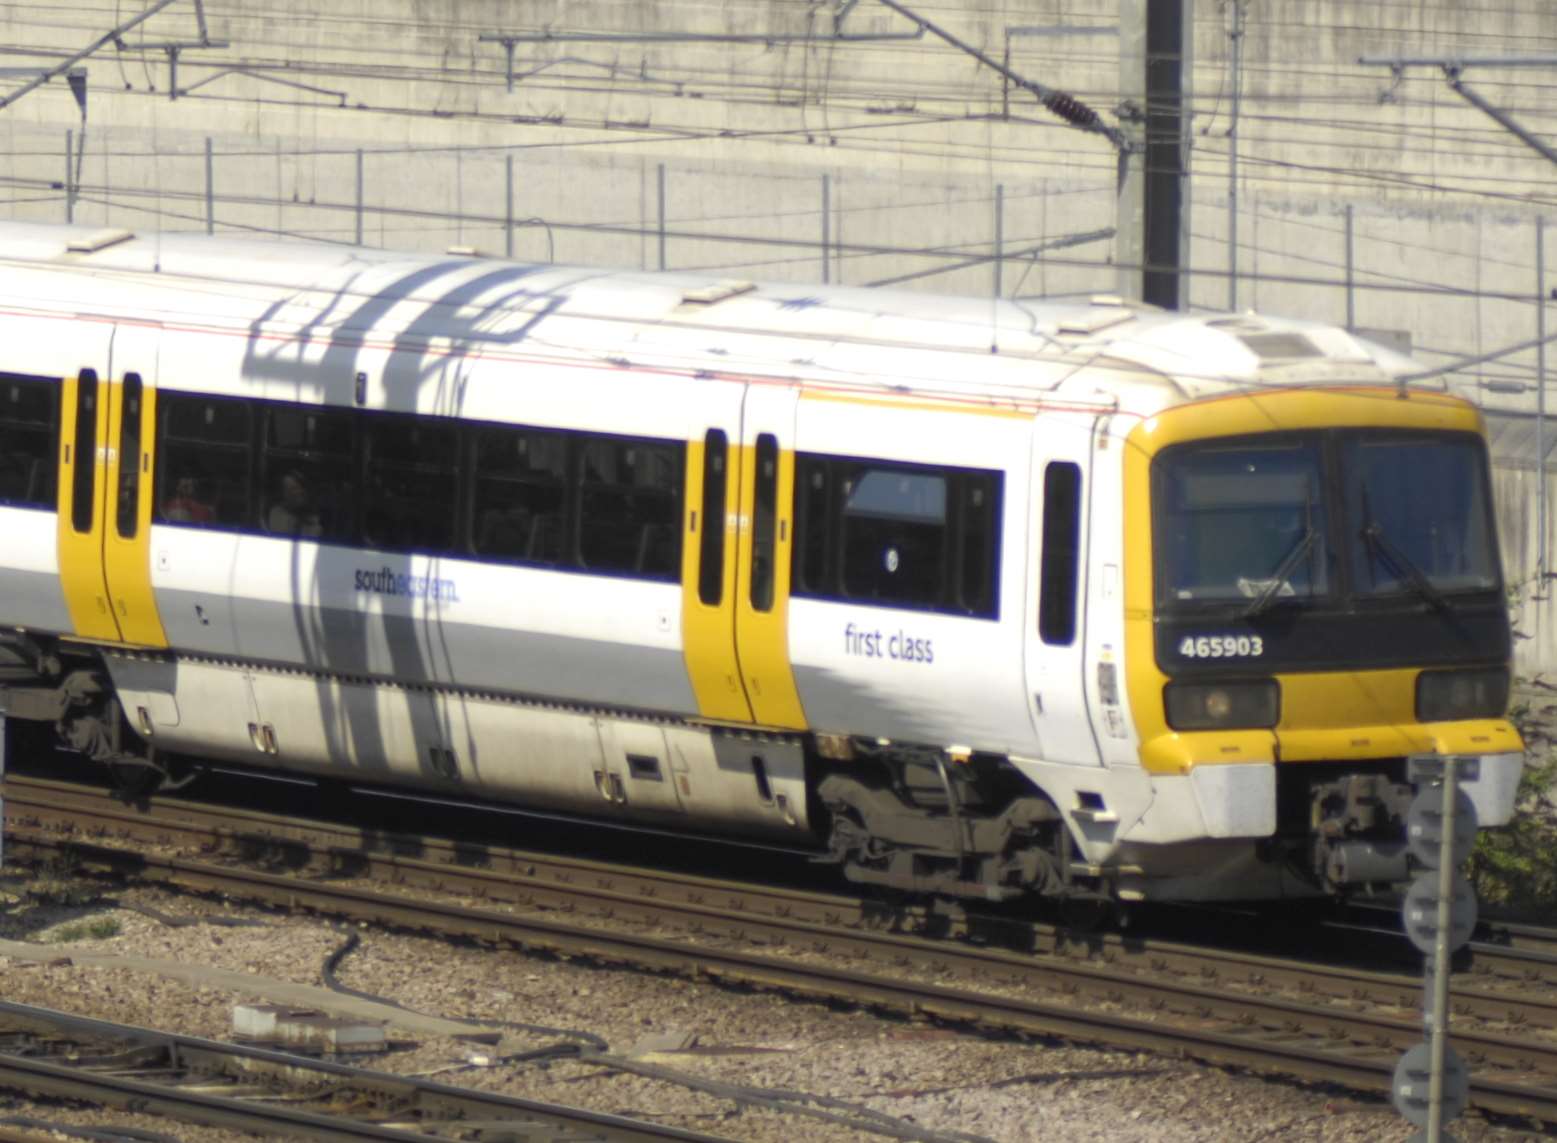 Southeastern runs services across Kent